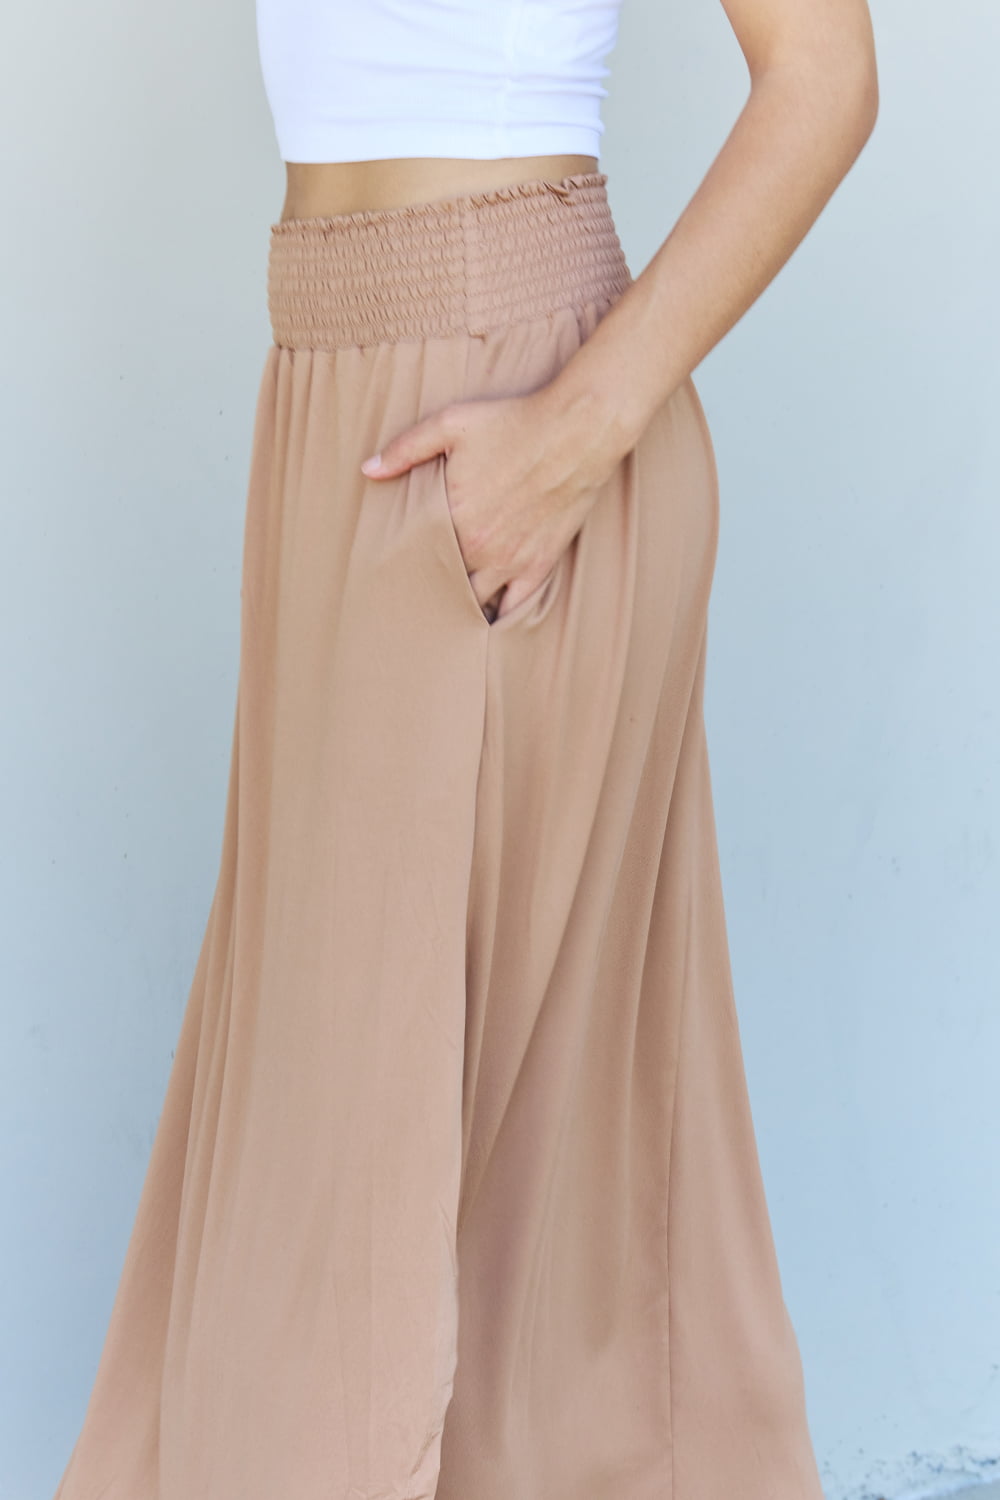 Doublju Comfort Princess Full Size High Waist Scoop Hem Maxi Skirt in Tan - nailedmoms